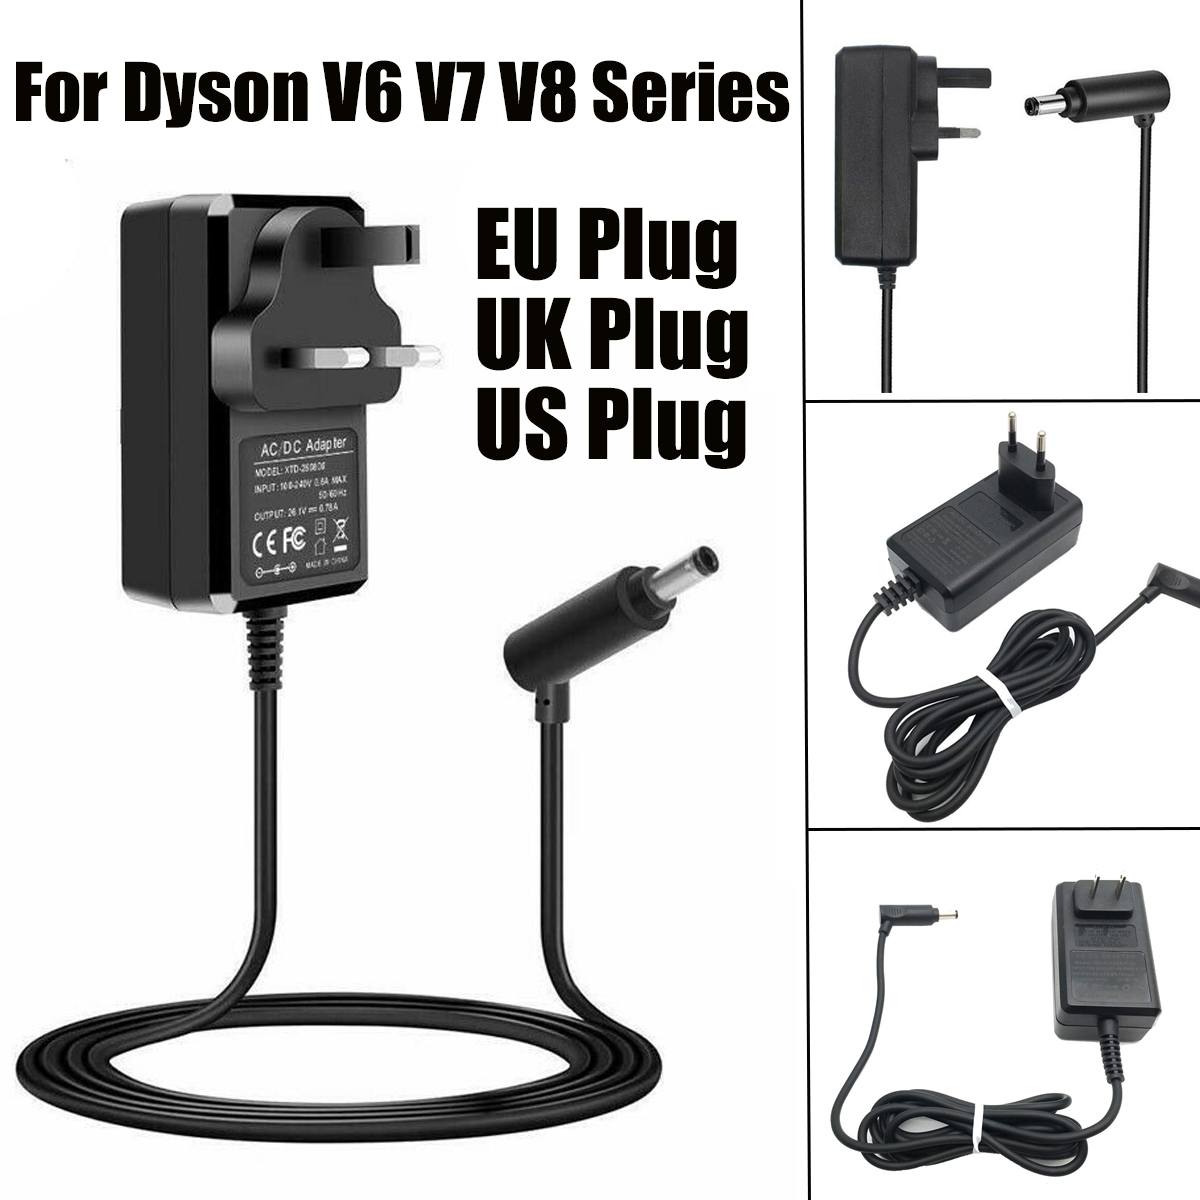 1 Pcs EU Plug Charging Adapter for Dyson V6 V7 V8 DC59 Vacuum